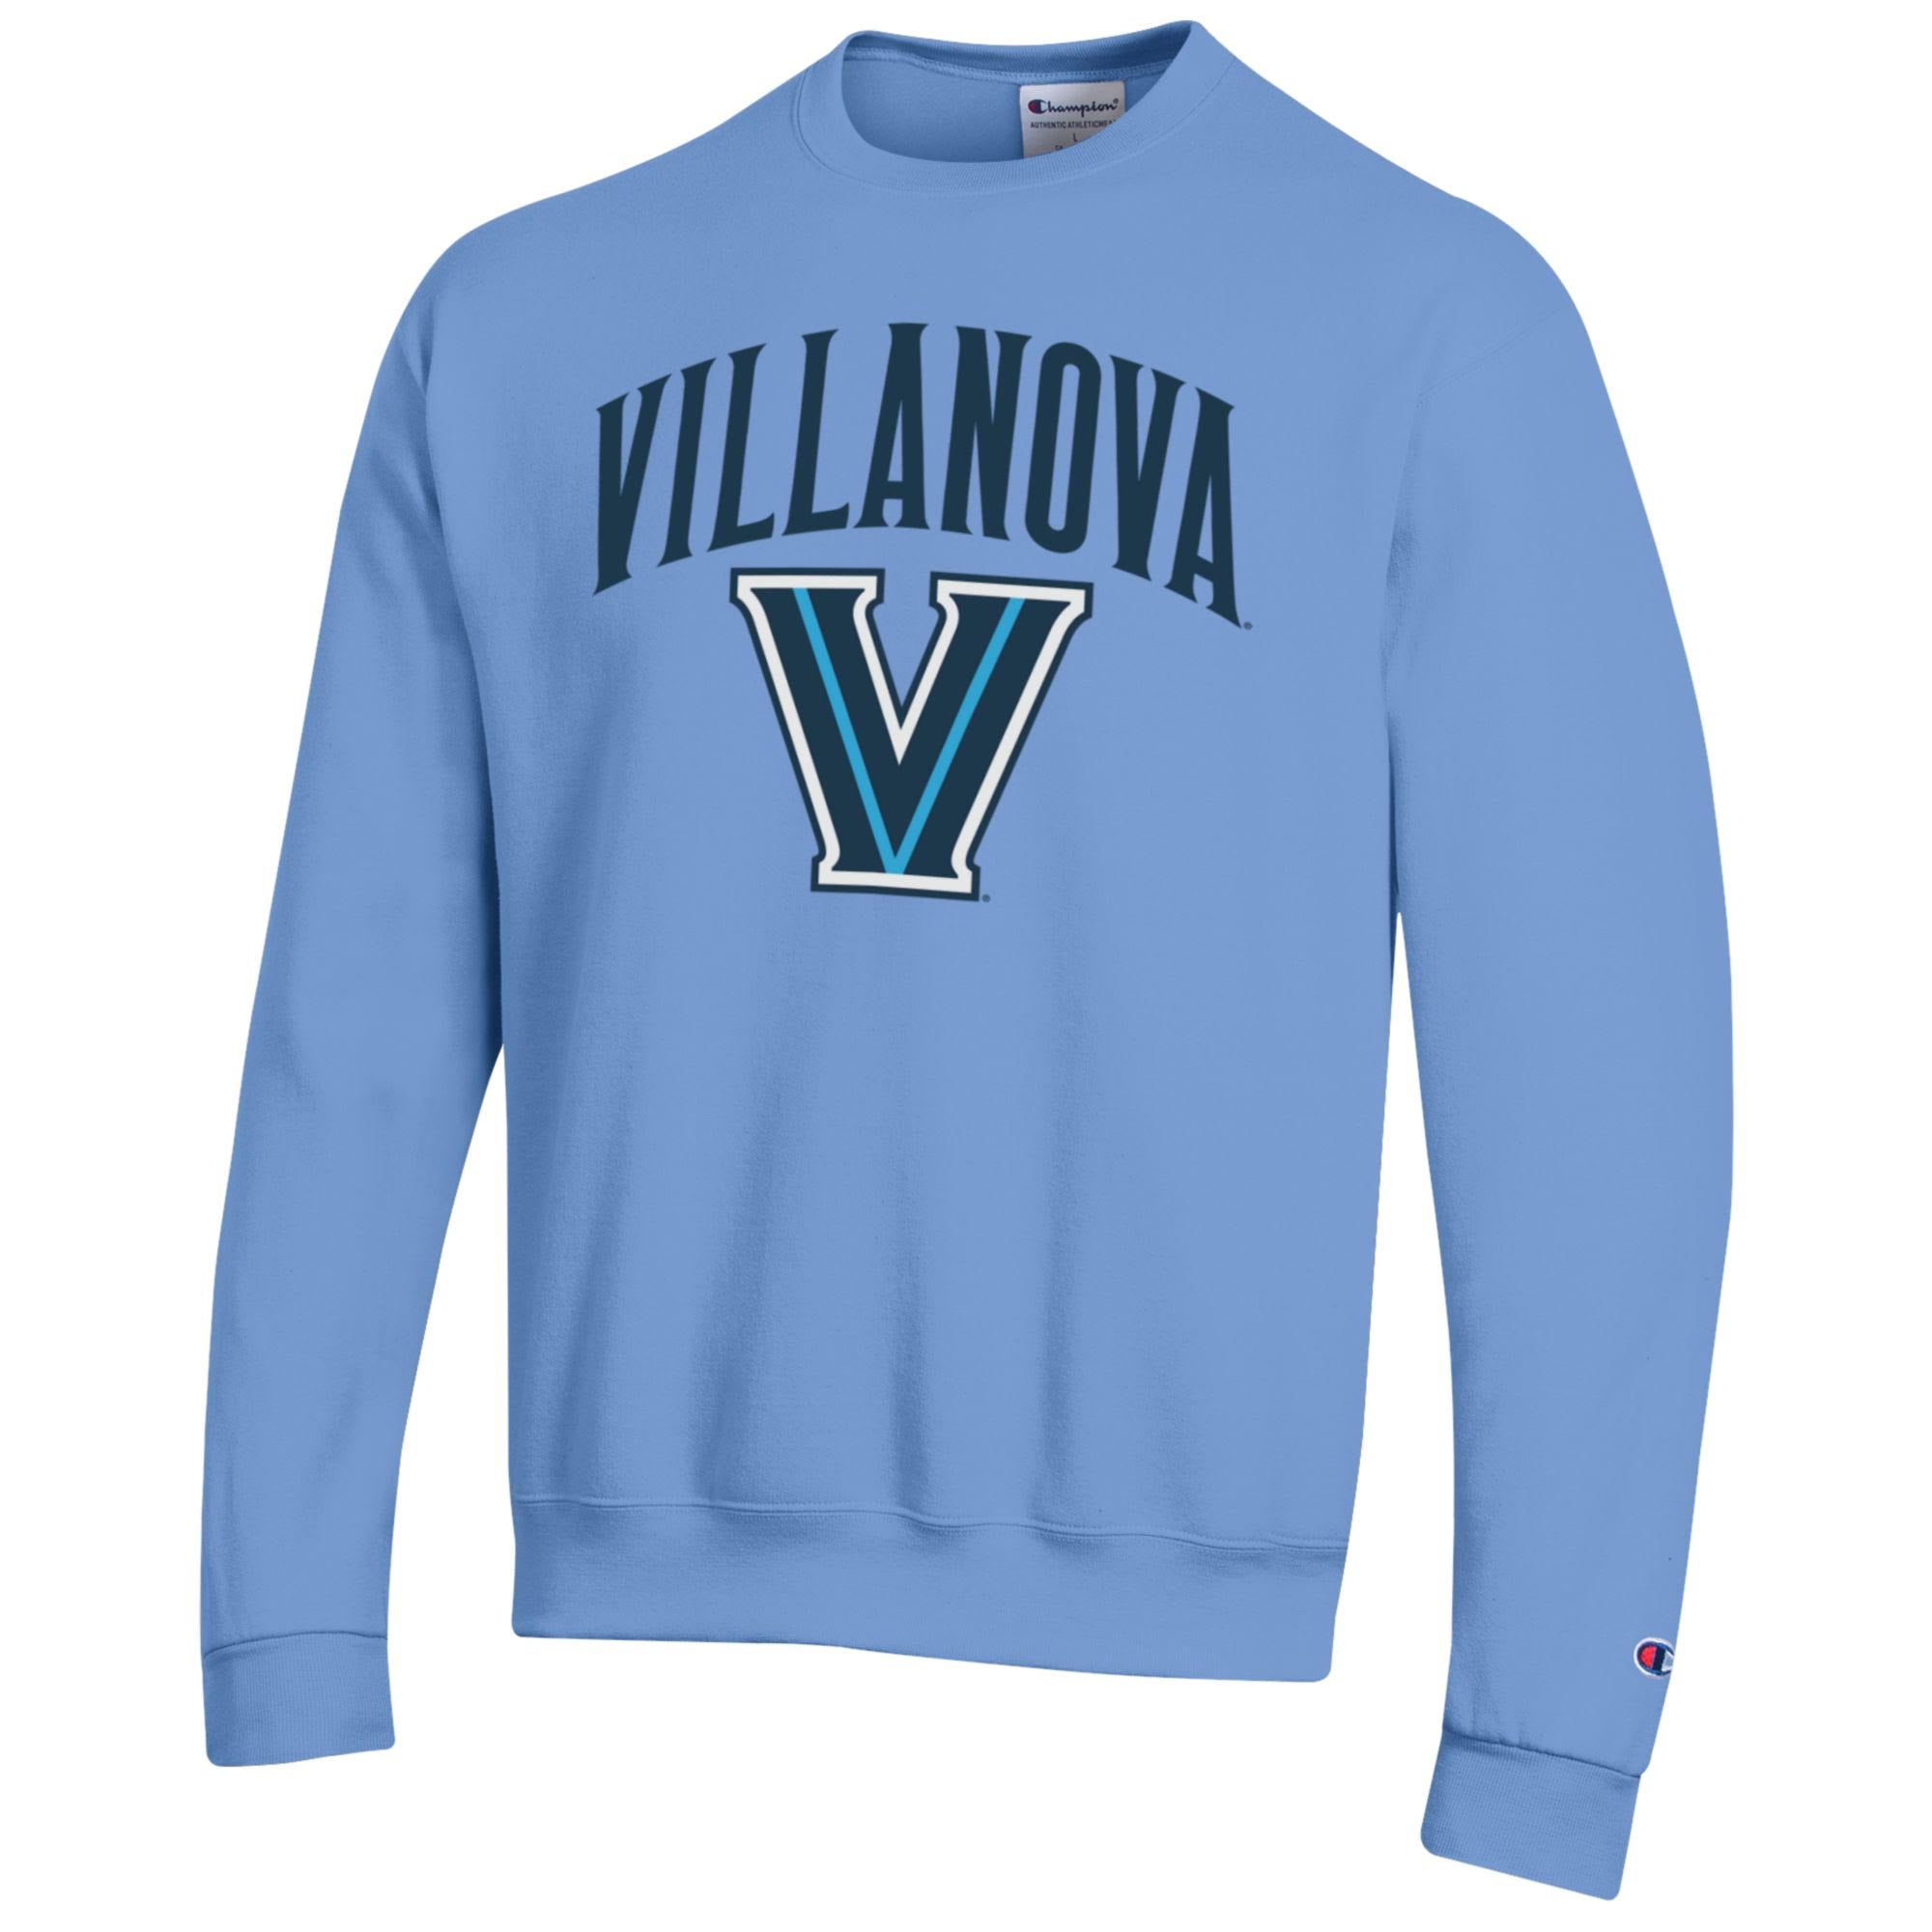 Villanova Wildcats - Sweatshirts & T-shirts